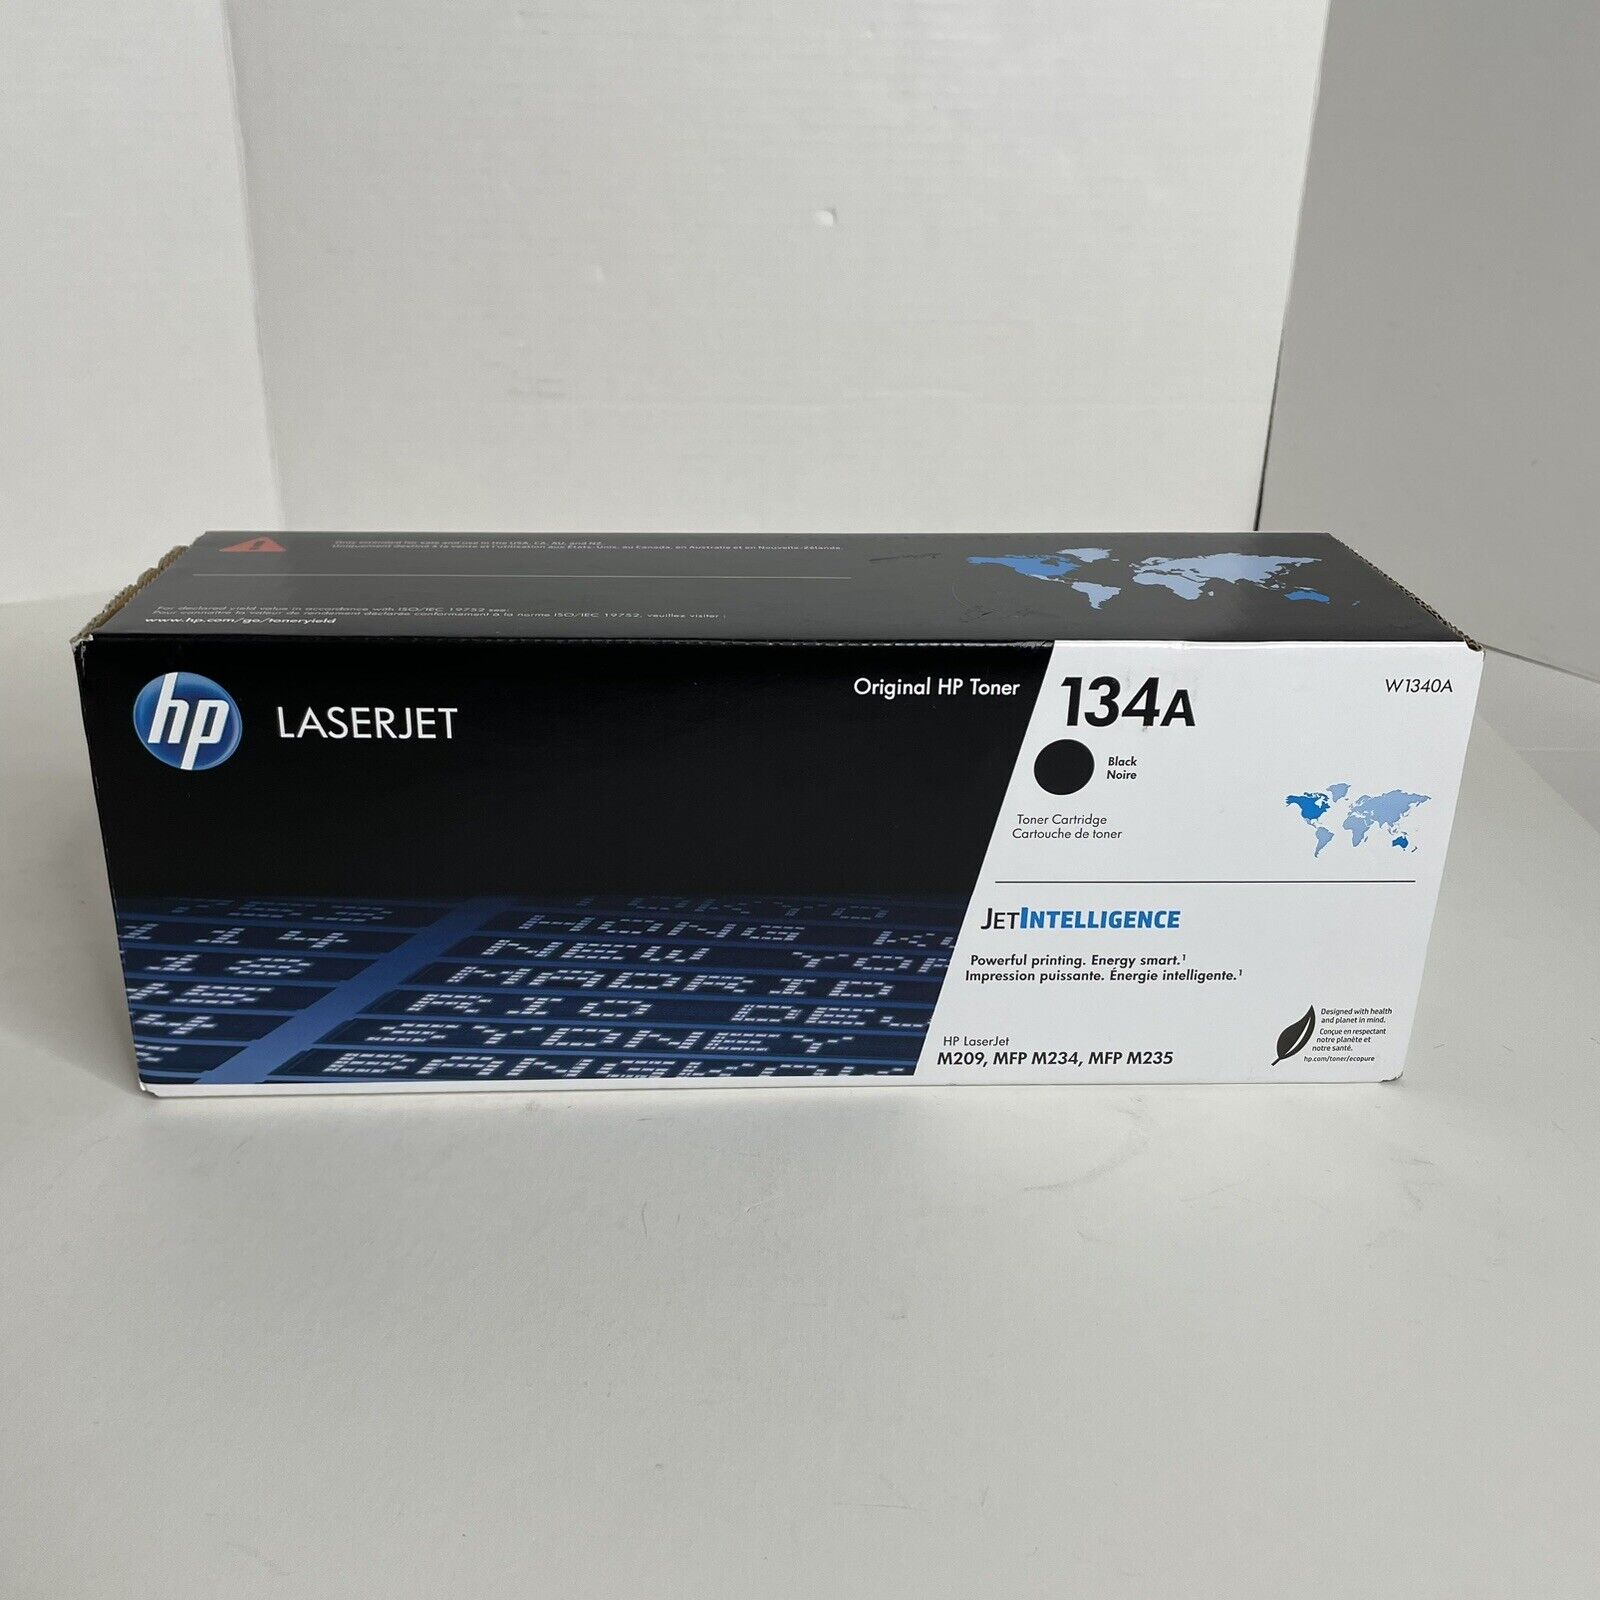 HP 134A Black OEM LaserJet Toner Cartridge, ~1,100 pages, W1340A